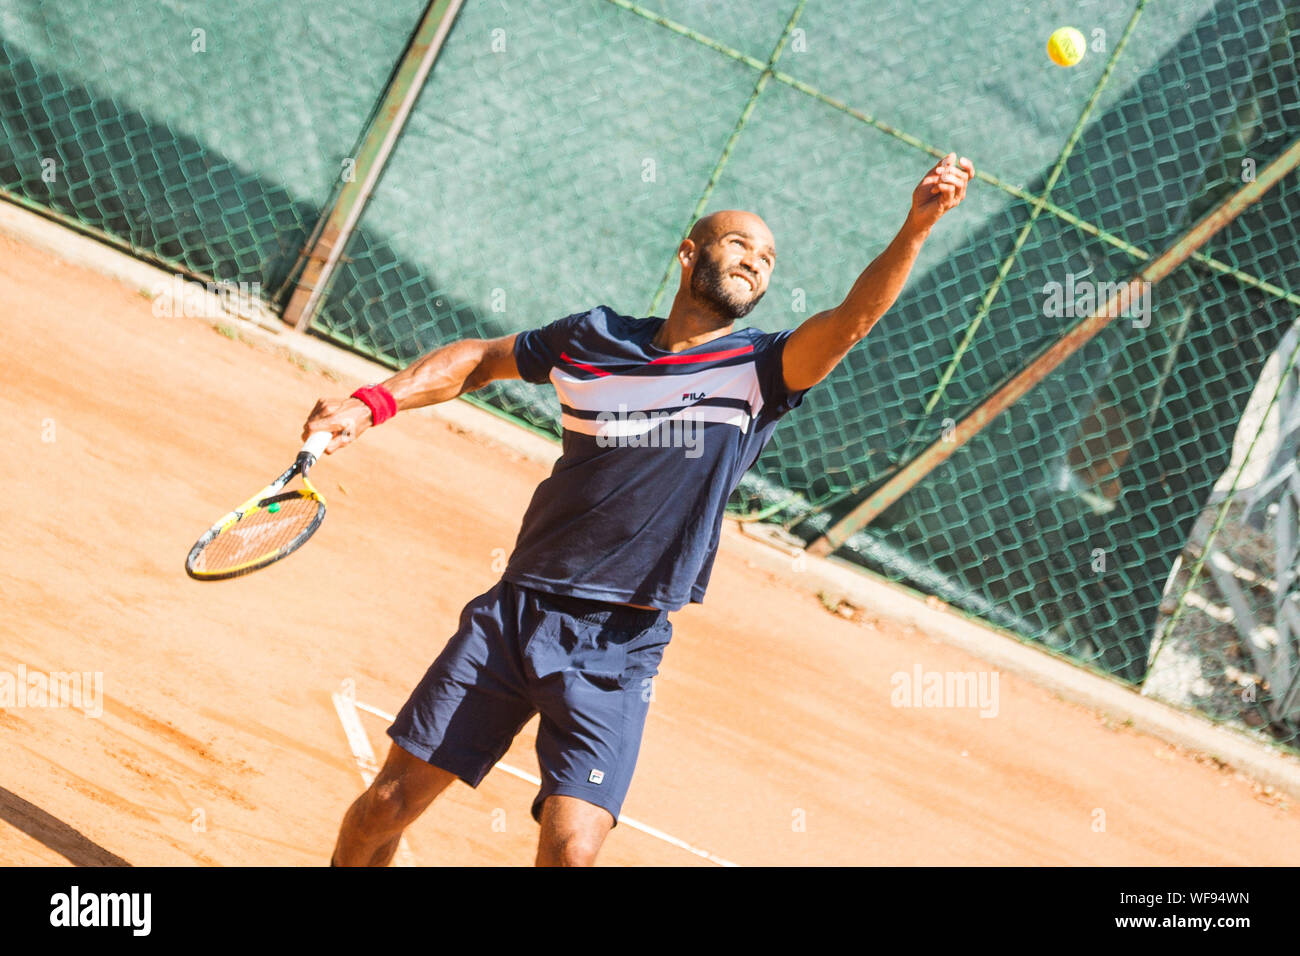 SADIO DOUMBIA during Atp Challenger Como 2019, Como, Italy, 30 Aug 2019, Tennis  Tennis Internationals Stock Photo - Alamy